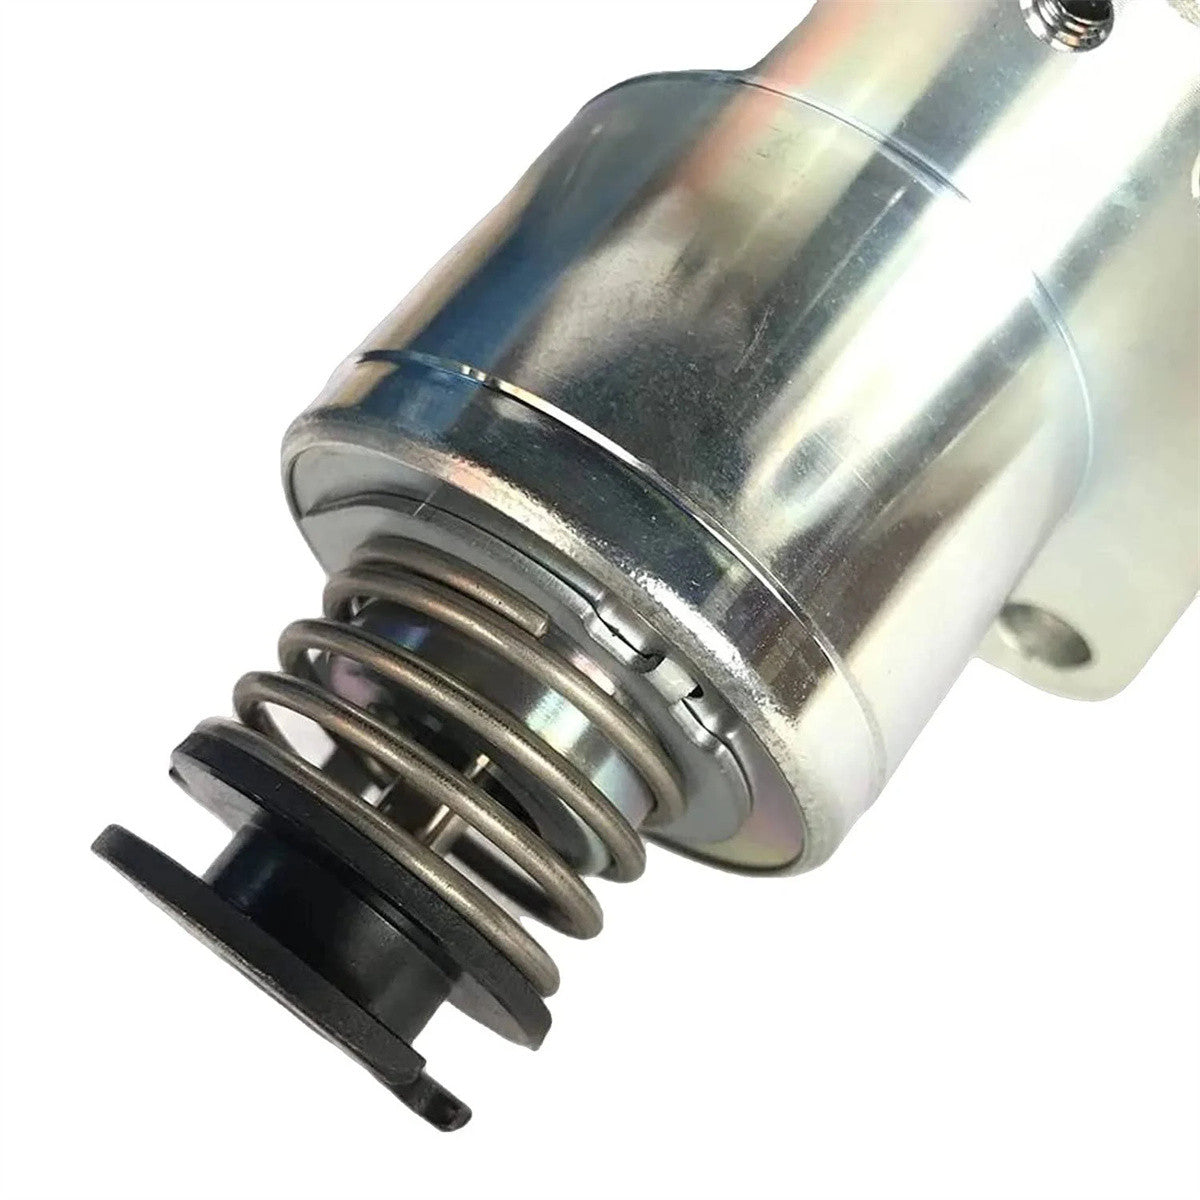 129927-61601 729975-51310 Fuel Pump Rack Actuator for Yanmar Engine 3TNV88 4TNV98 - Sinocmp